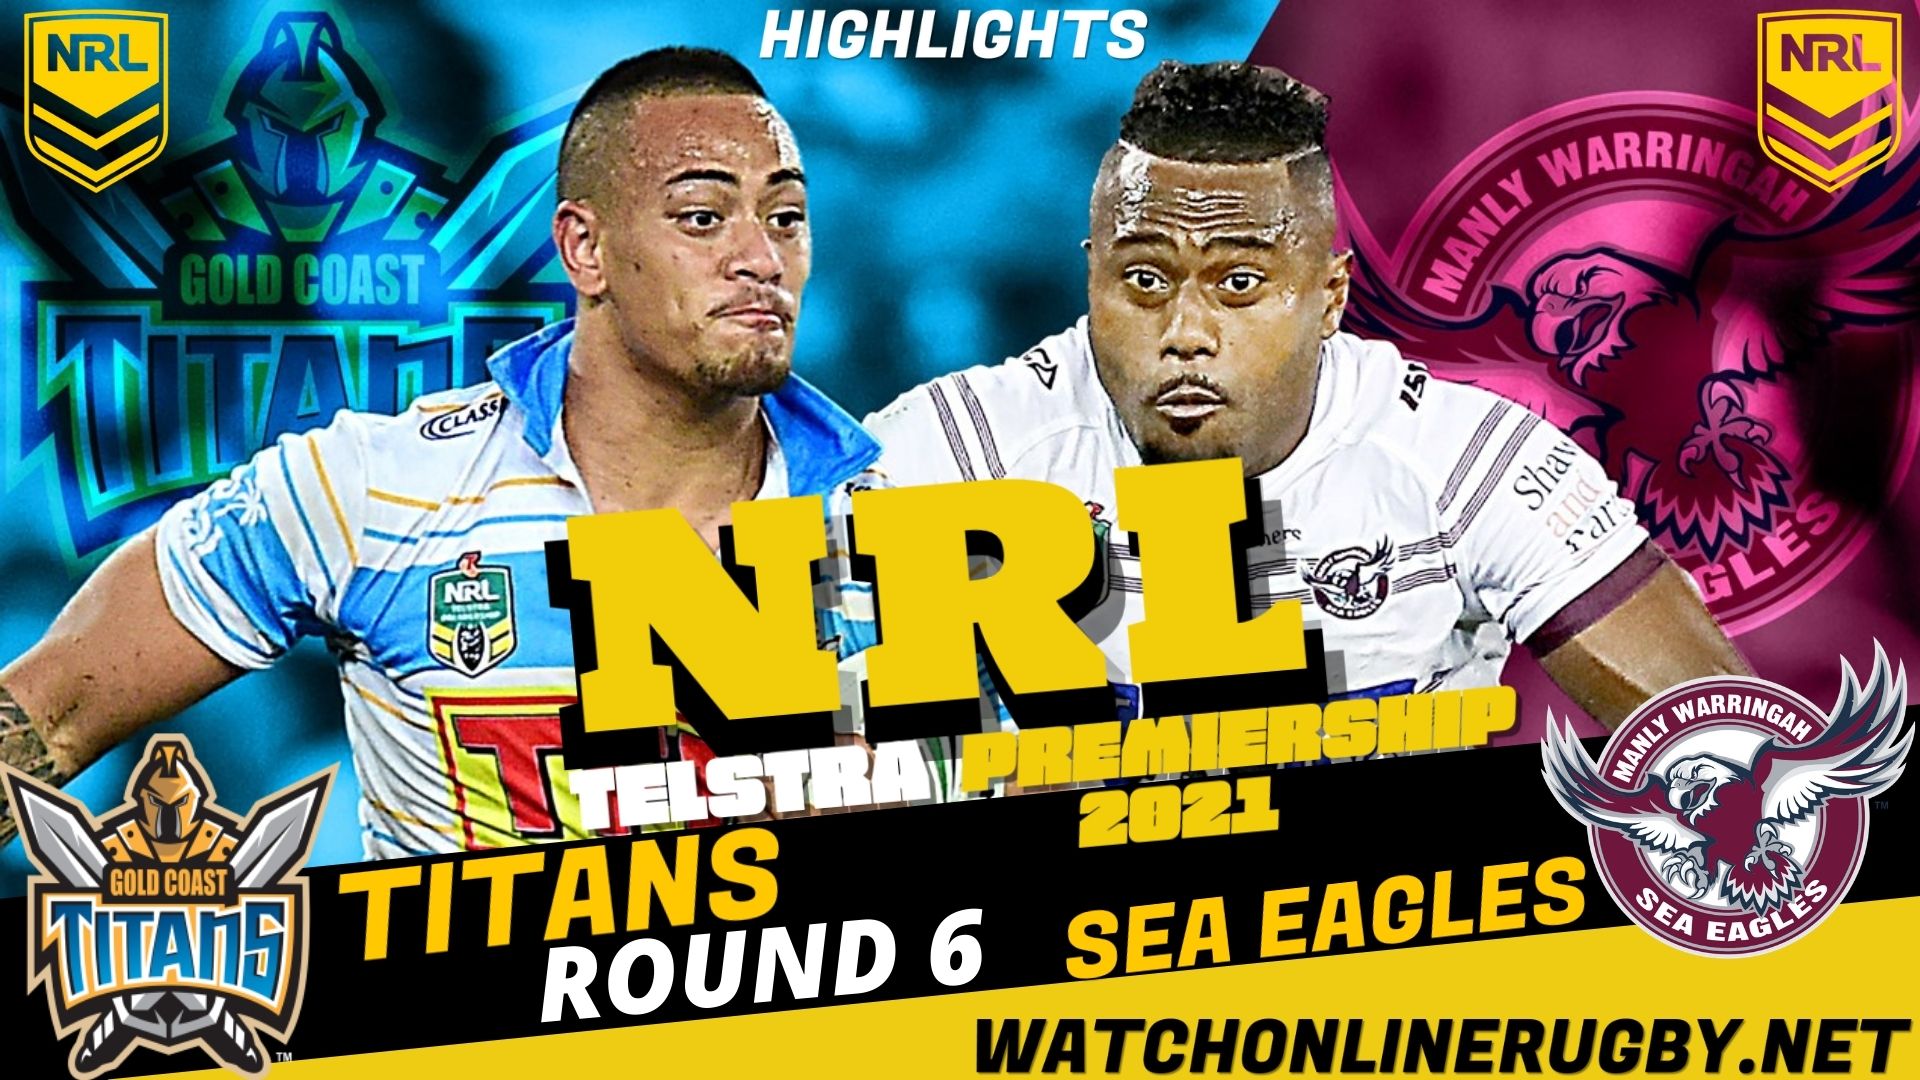 Sea Eagles Vs Titans Highlights RD 6 NRL Rugby